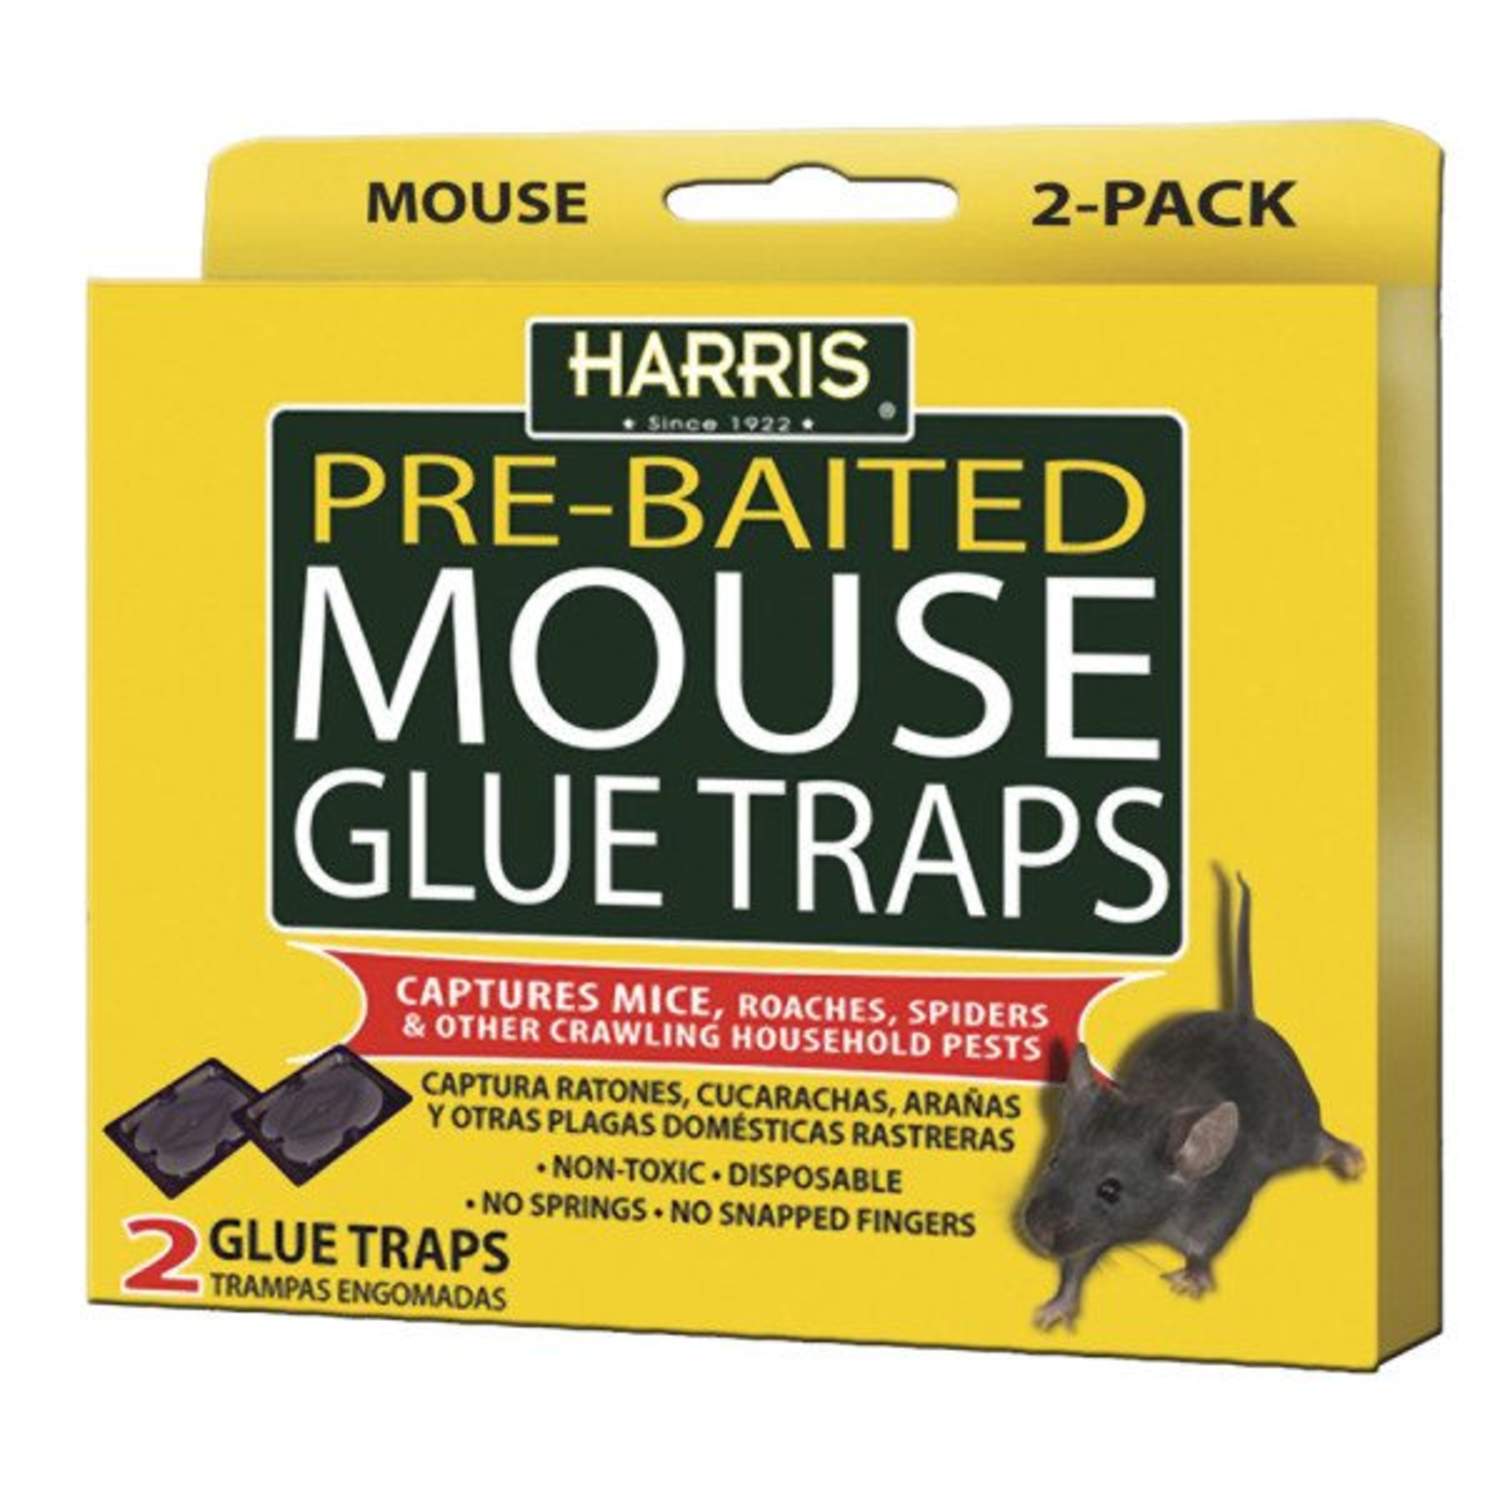 Harris HMG-2 Mouse Glue Trap 2-Pack at Sutherlands